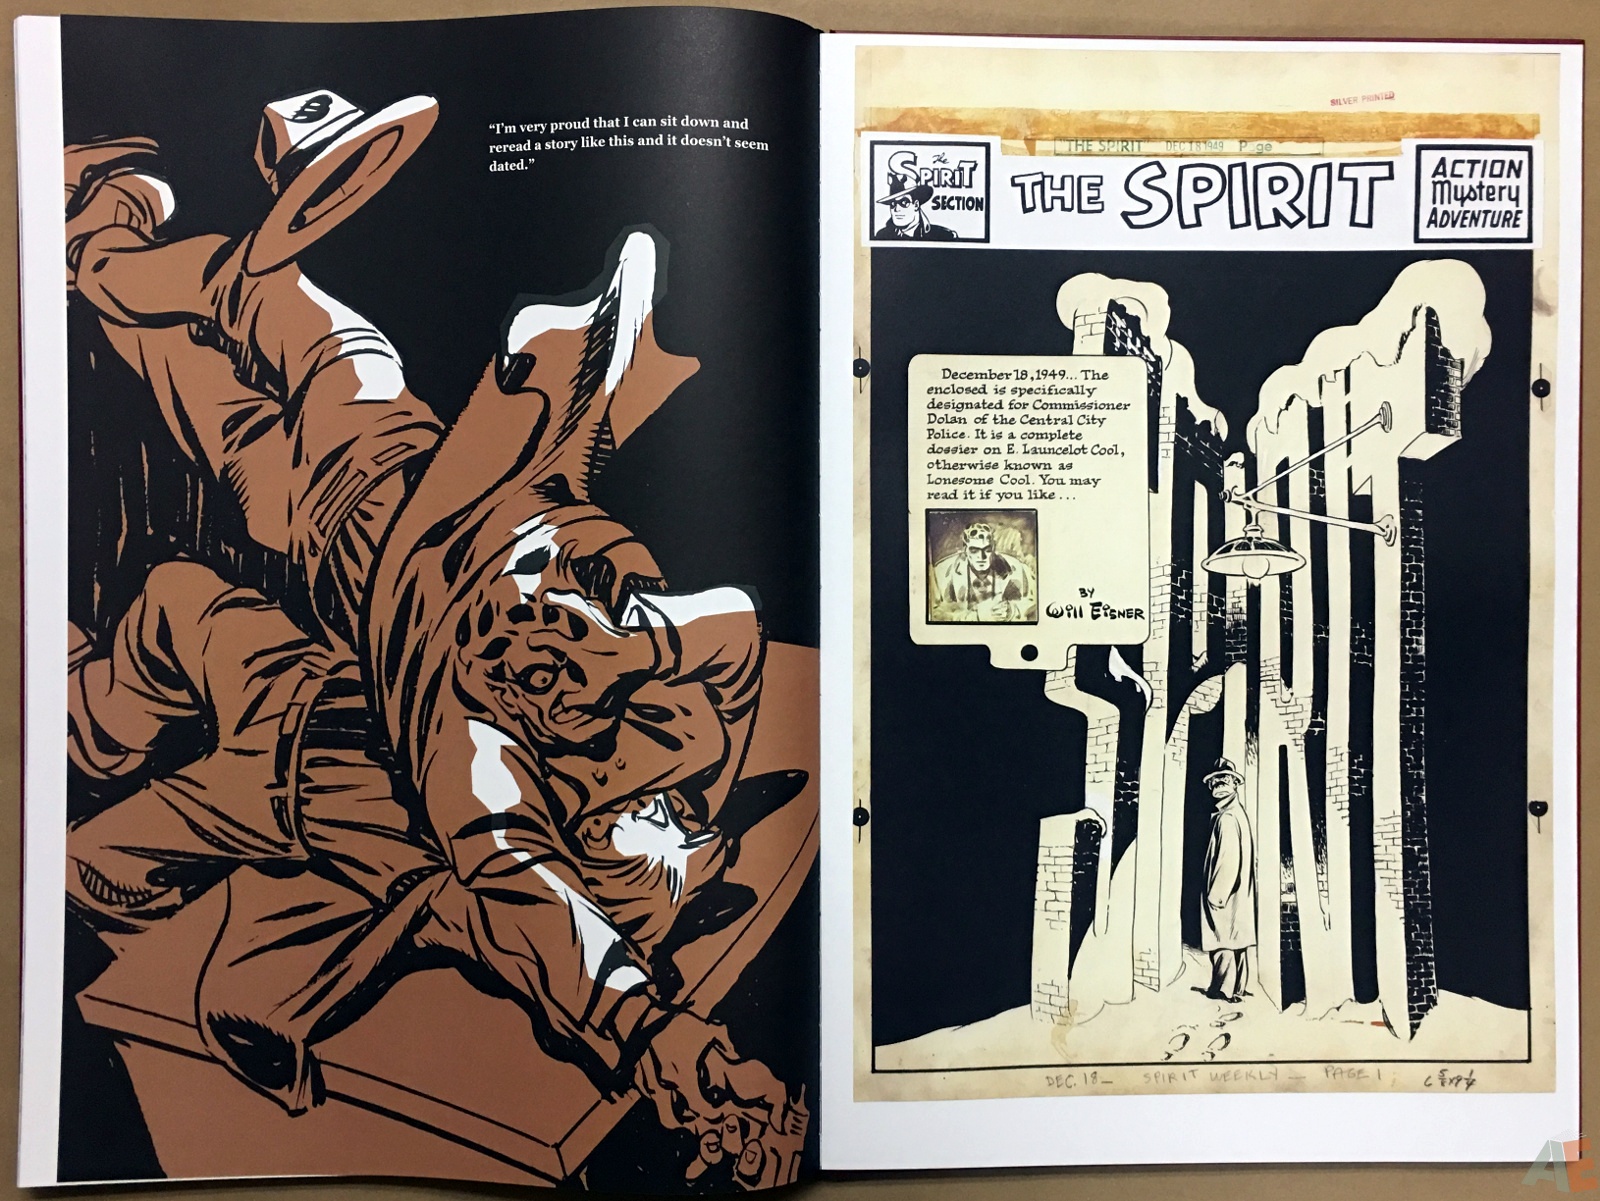 Will Eisner's The Spirit Artist's Edition Volume Two